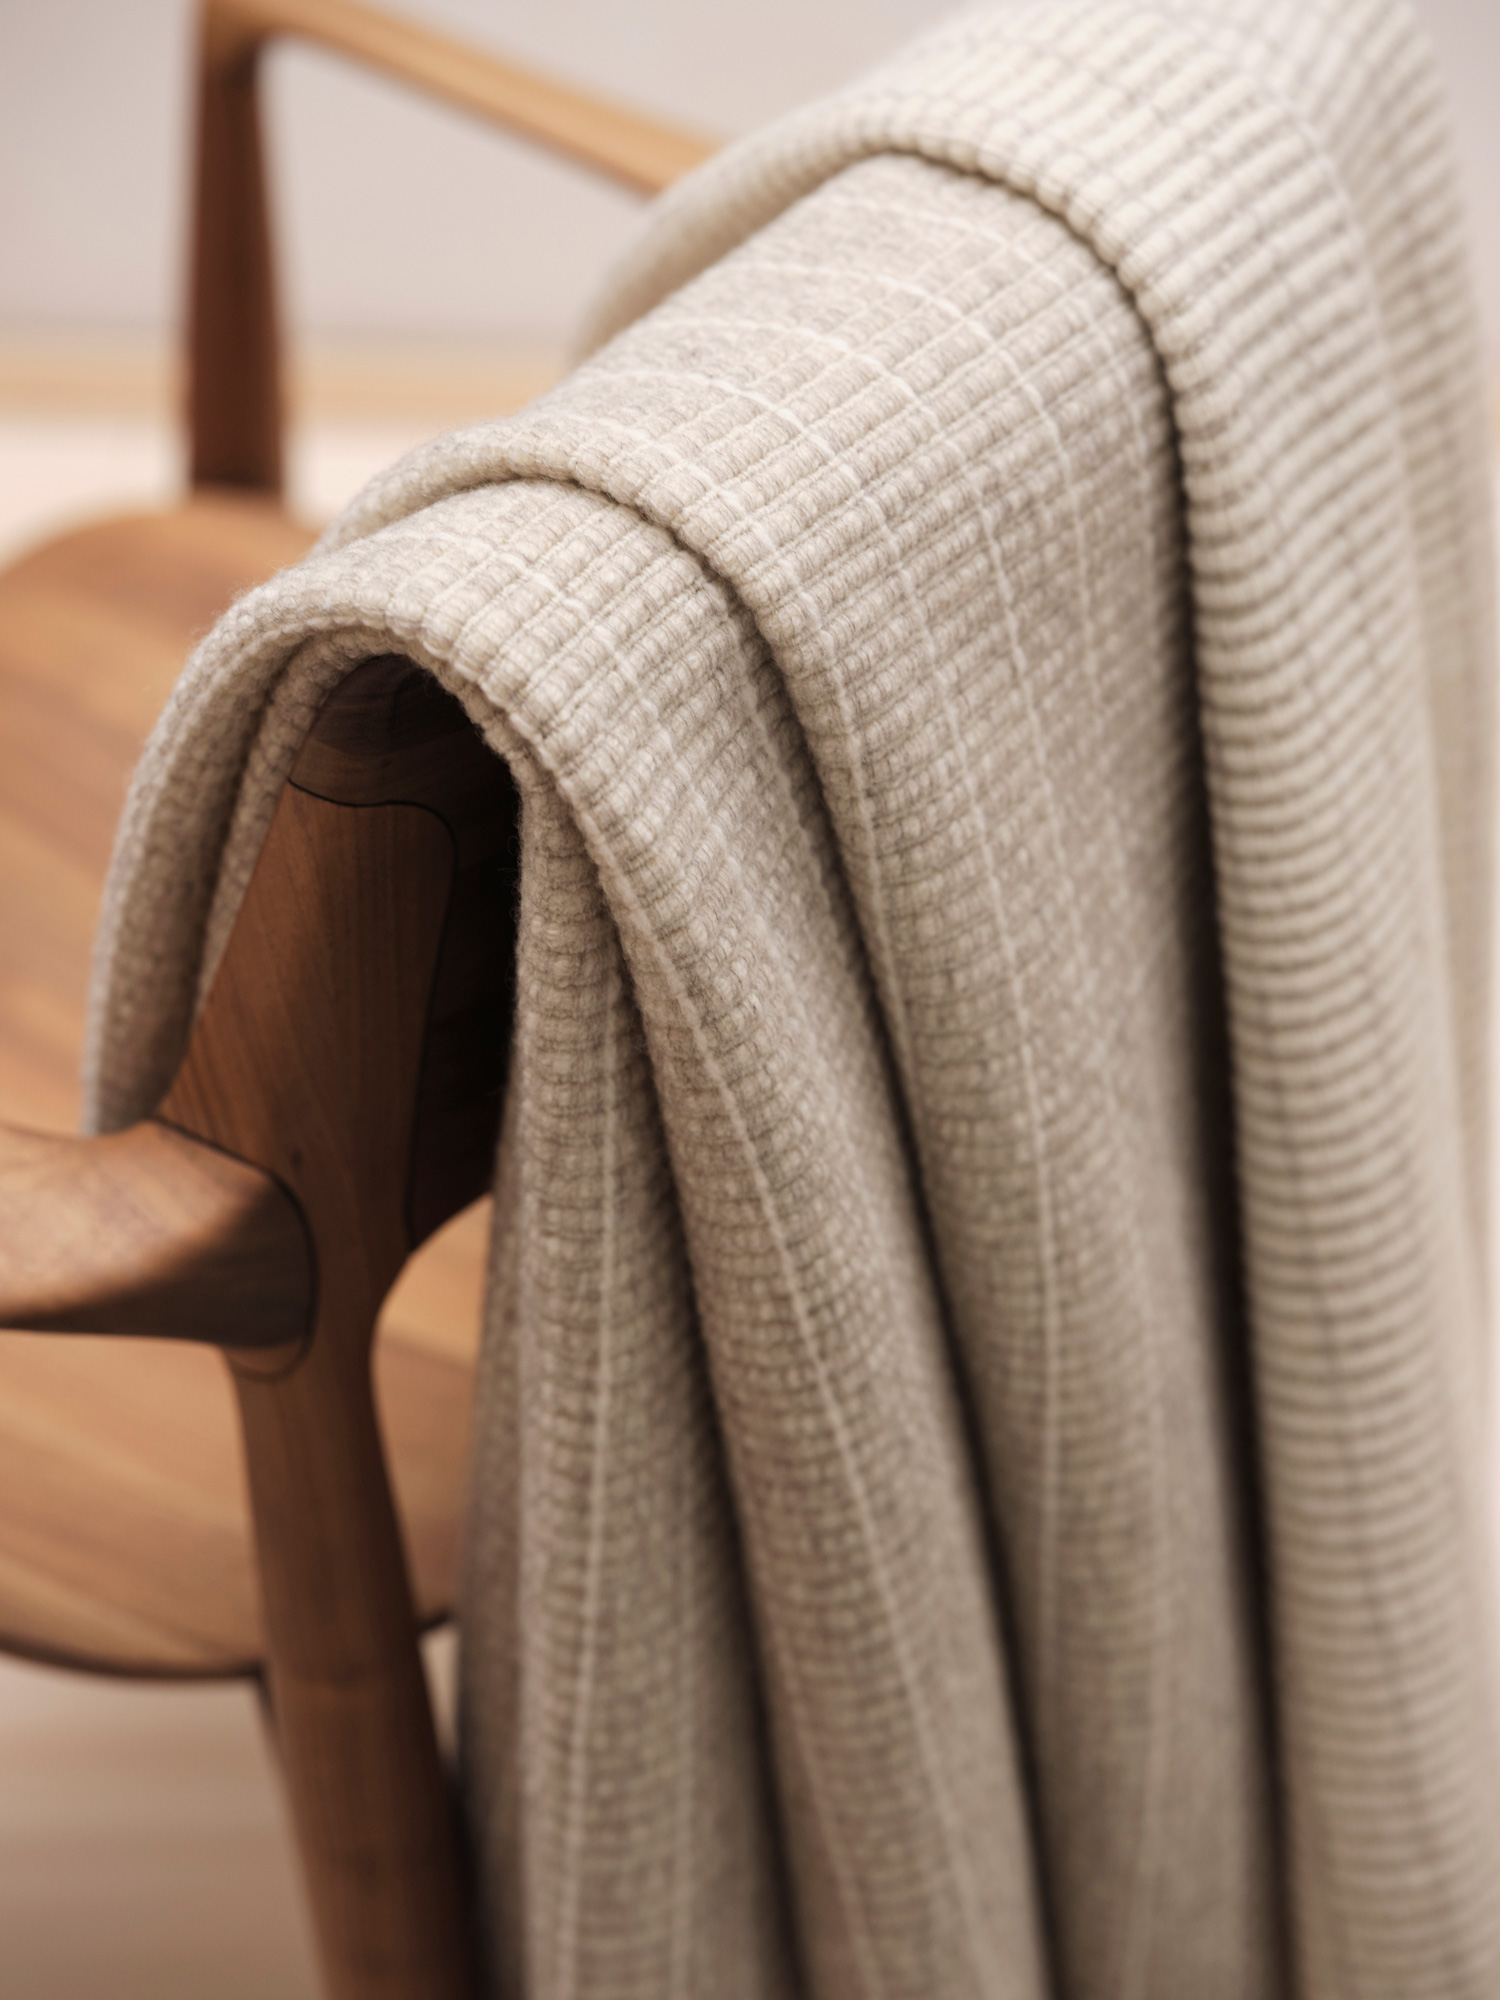 Manta de diseño realizada por John Pawson para Teixidors de lana merino en color mármol. Manta de diseño con franjas rectangulares apoyada sobre silla Carl Hanssen en madera